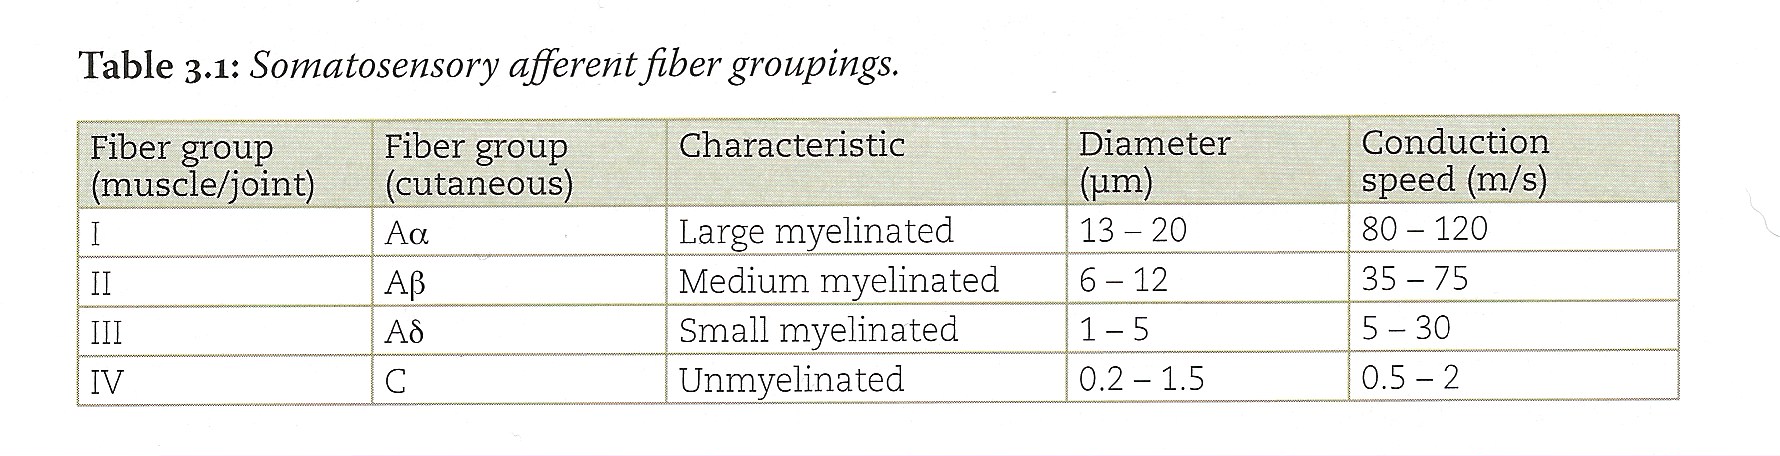 Table showing classification of somatosensory afferent fibers